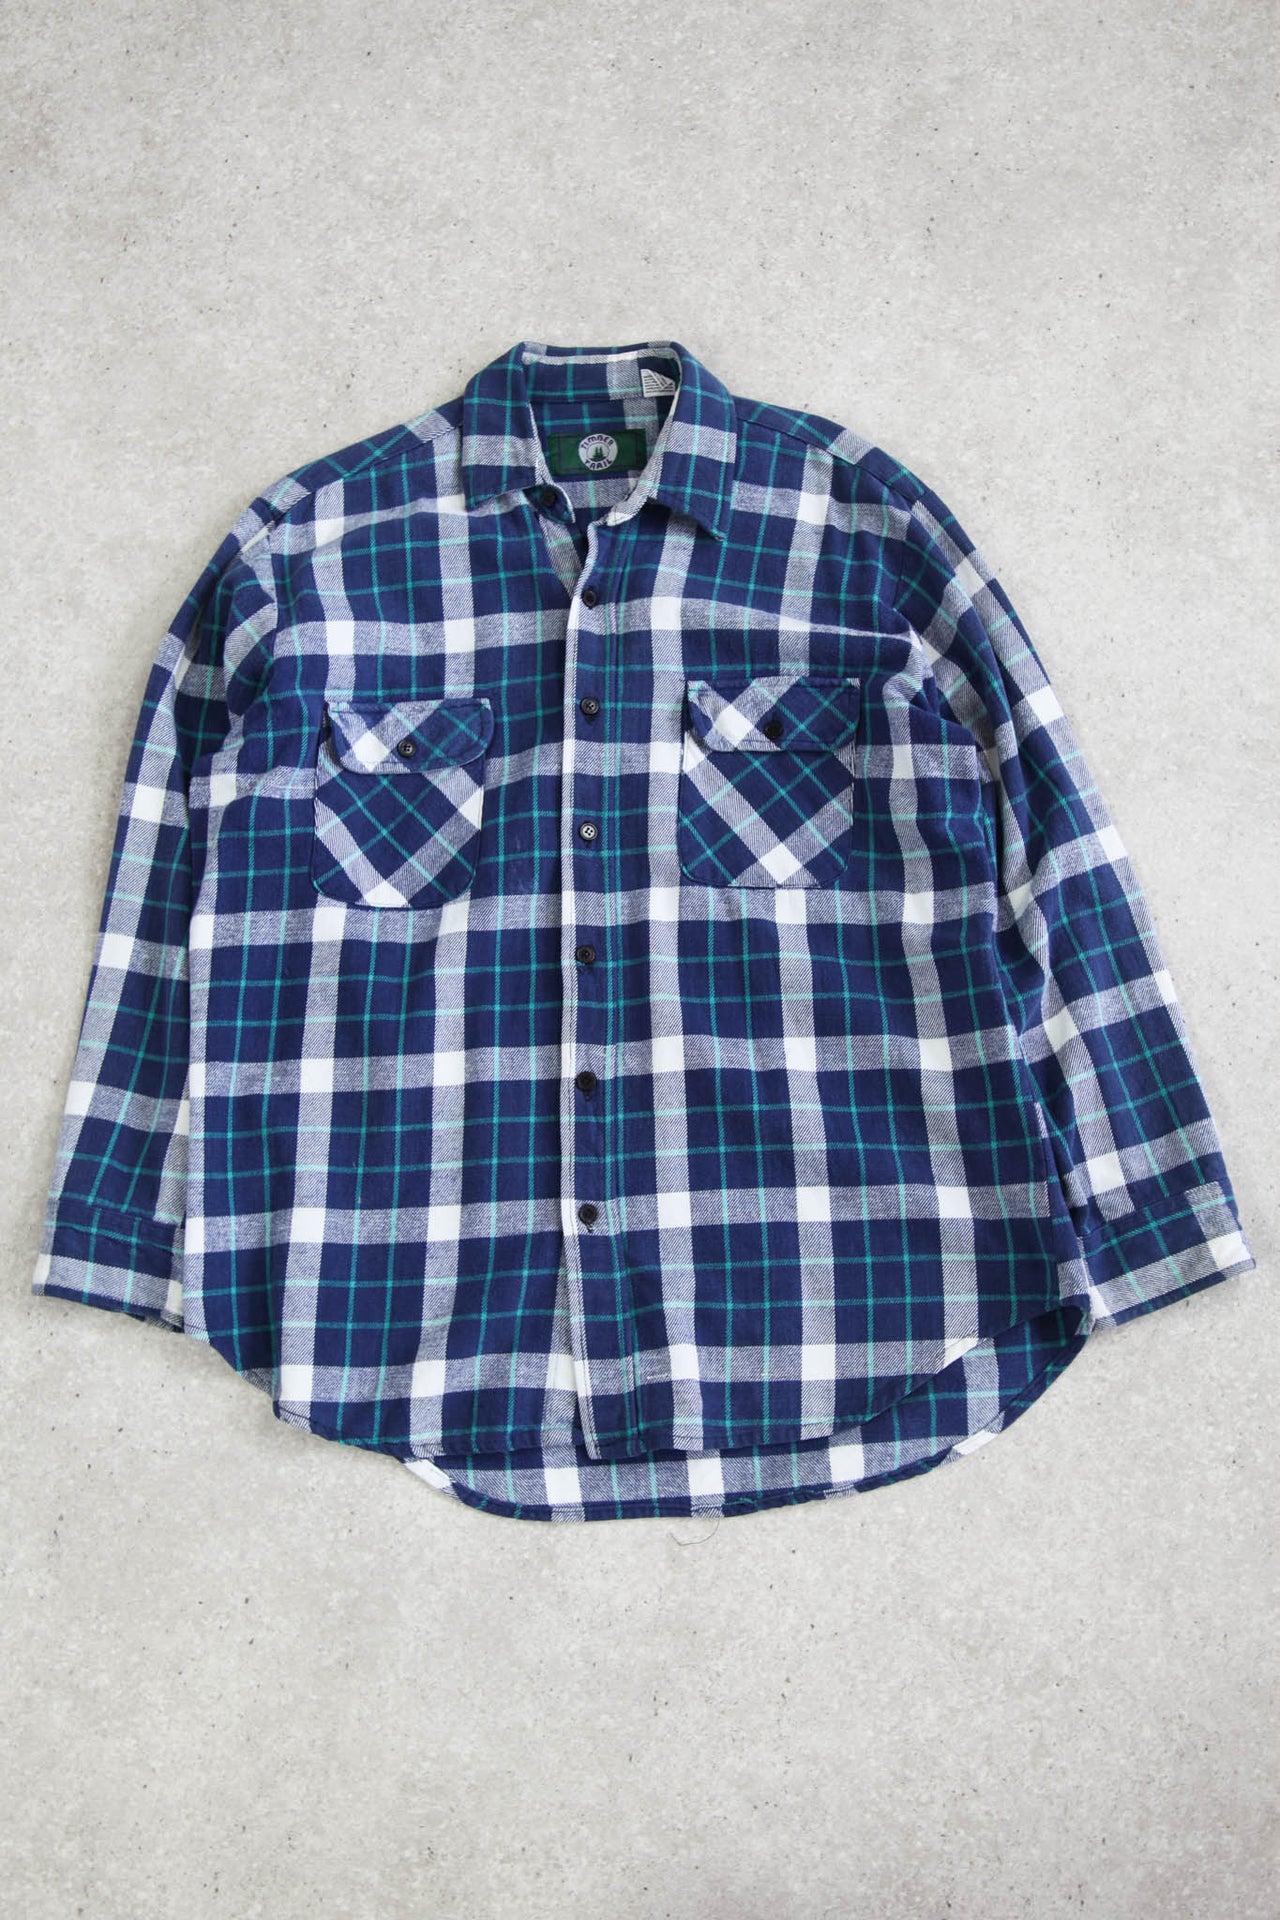 Brushed Cotton Checkered Shirt (M/L)